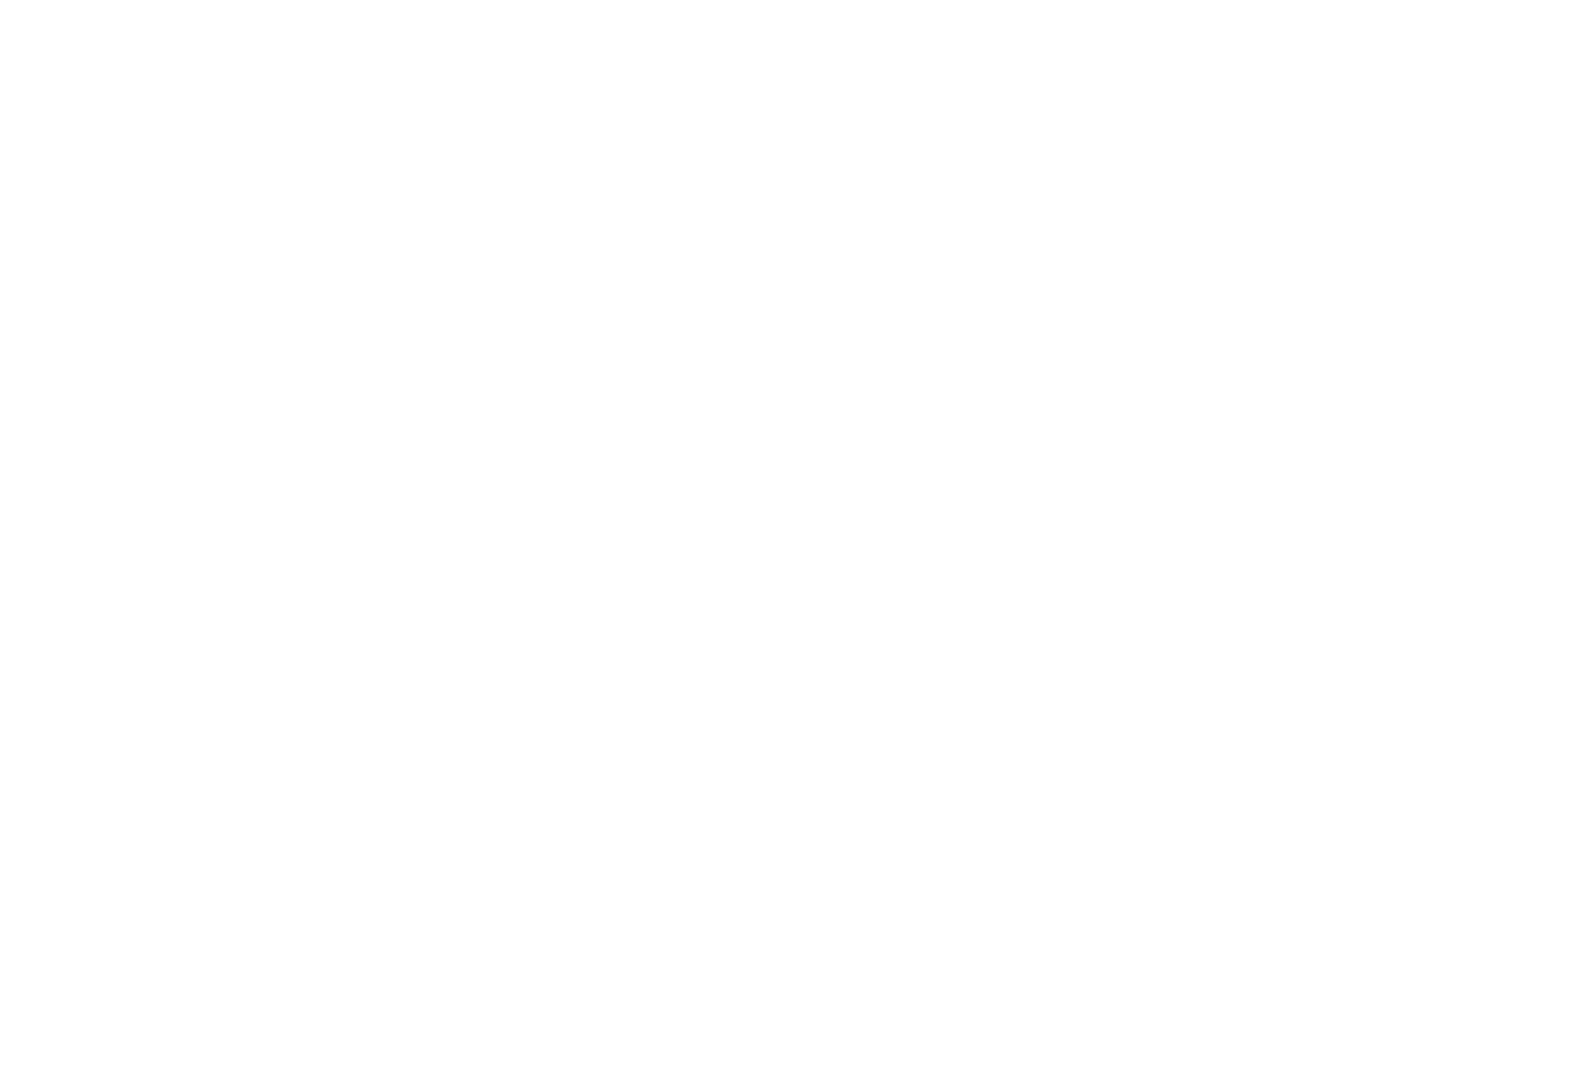 North American Construction Group logo pour fonds sombres (PNG transparent)